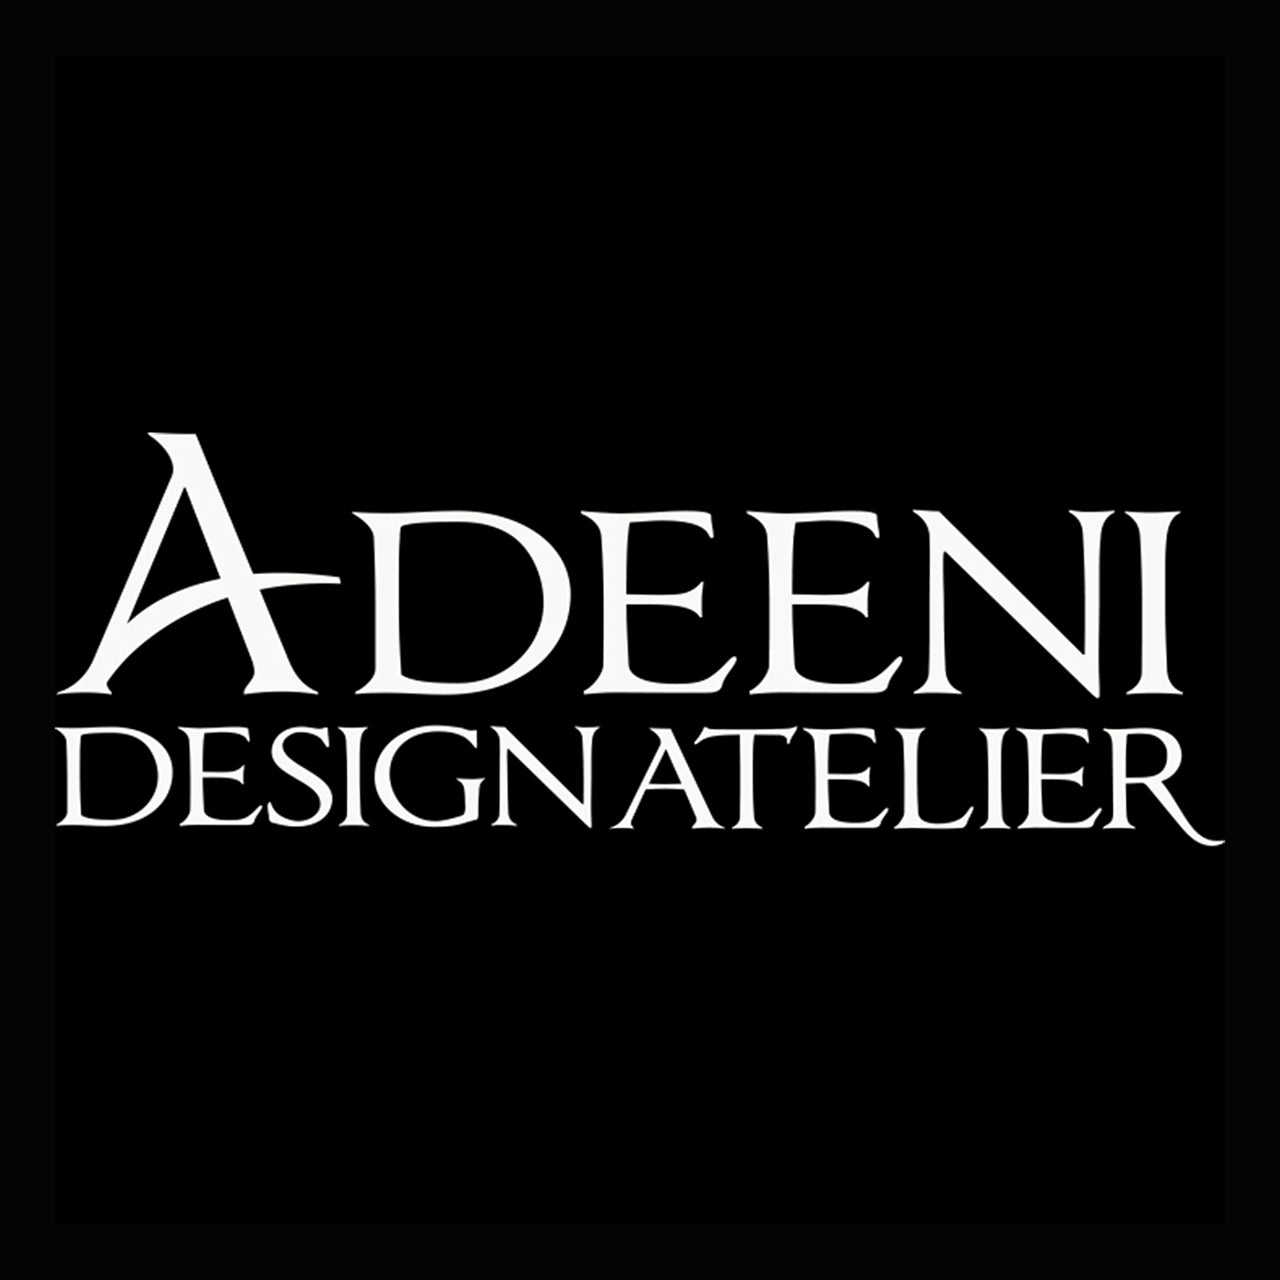 Adeeni Design Atelier